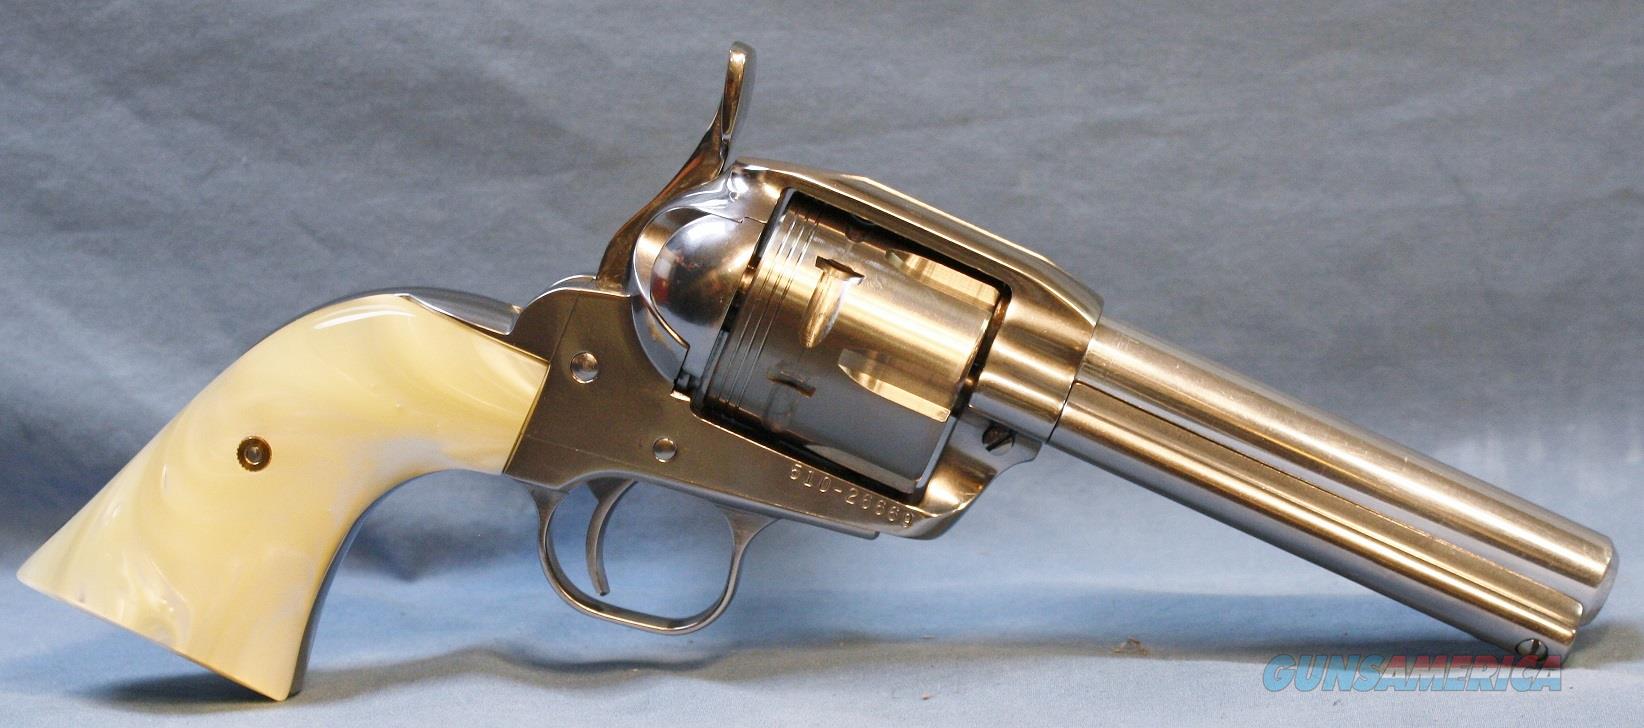 quickdraw revolver